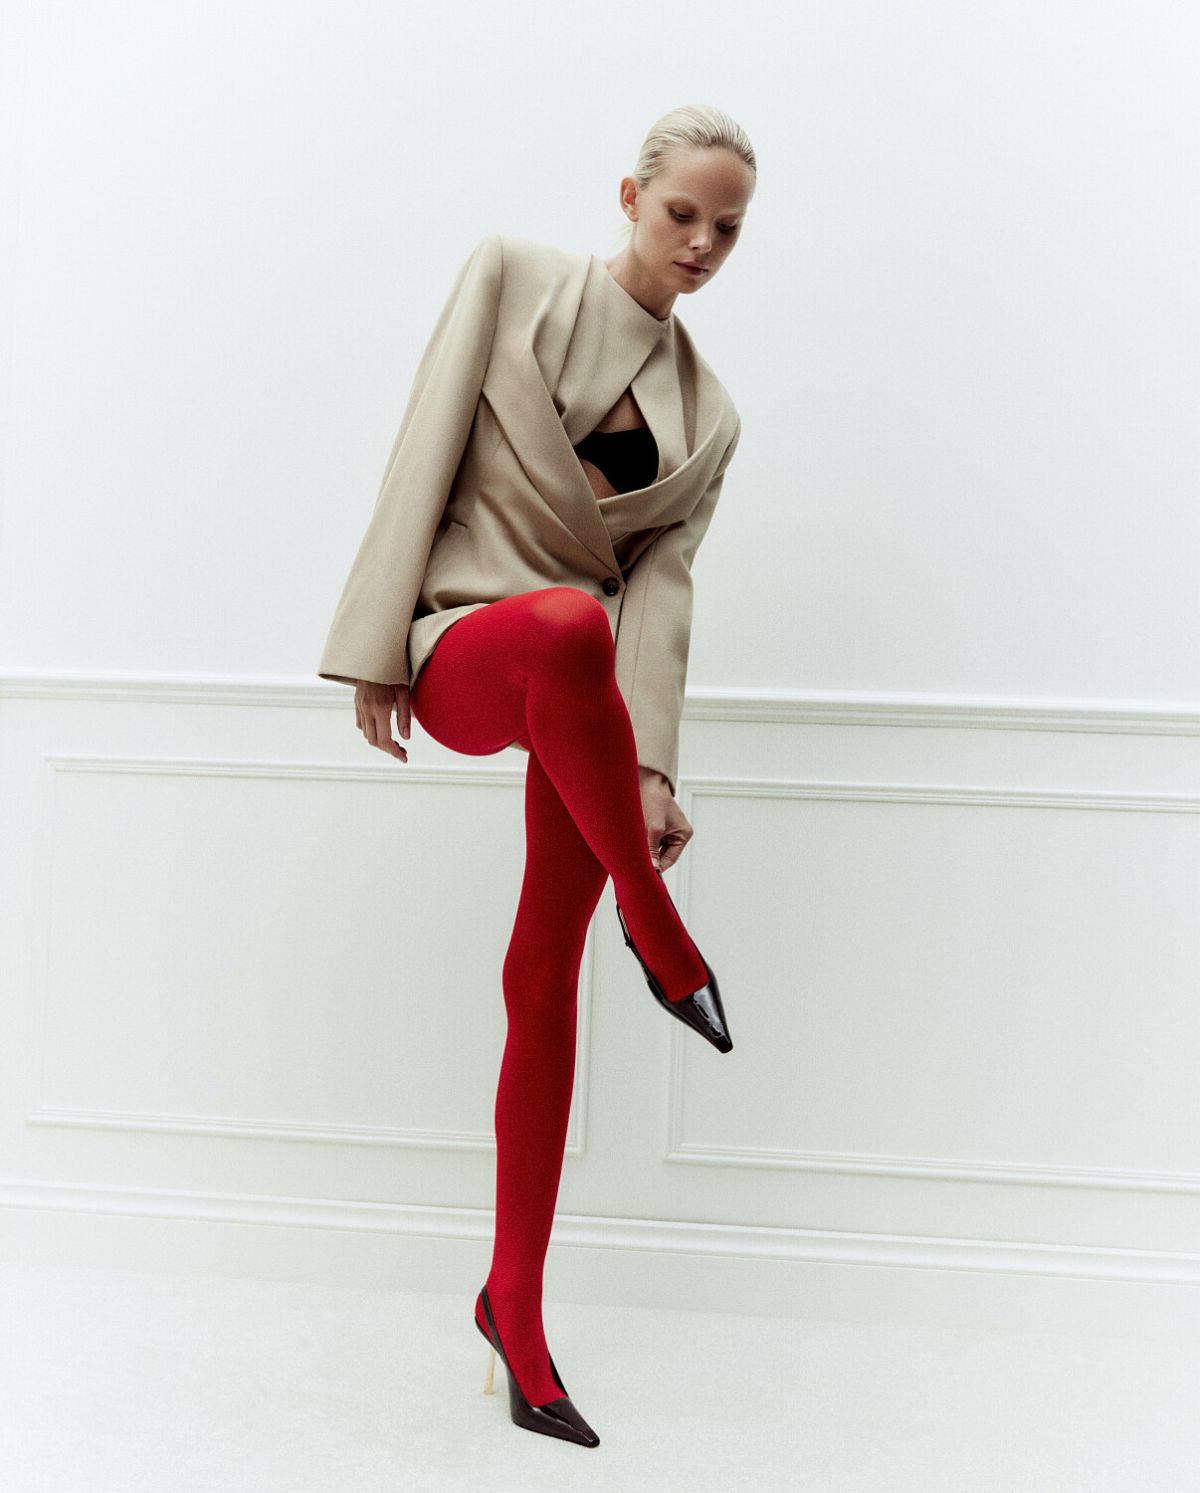 Calzedonia Red Tights Fashion Editorials